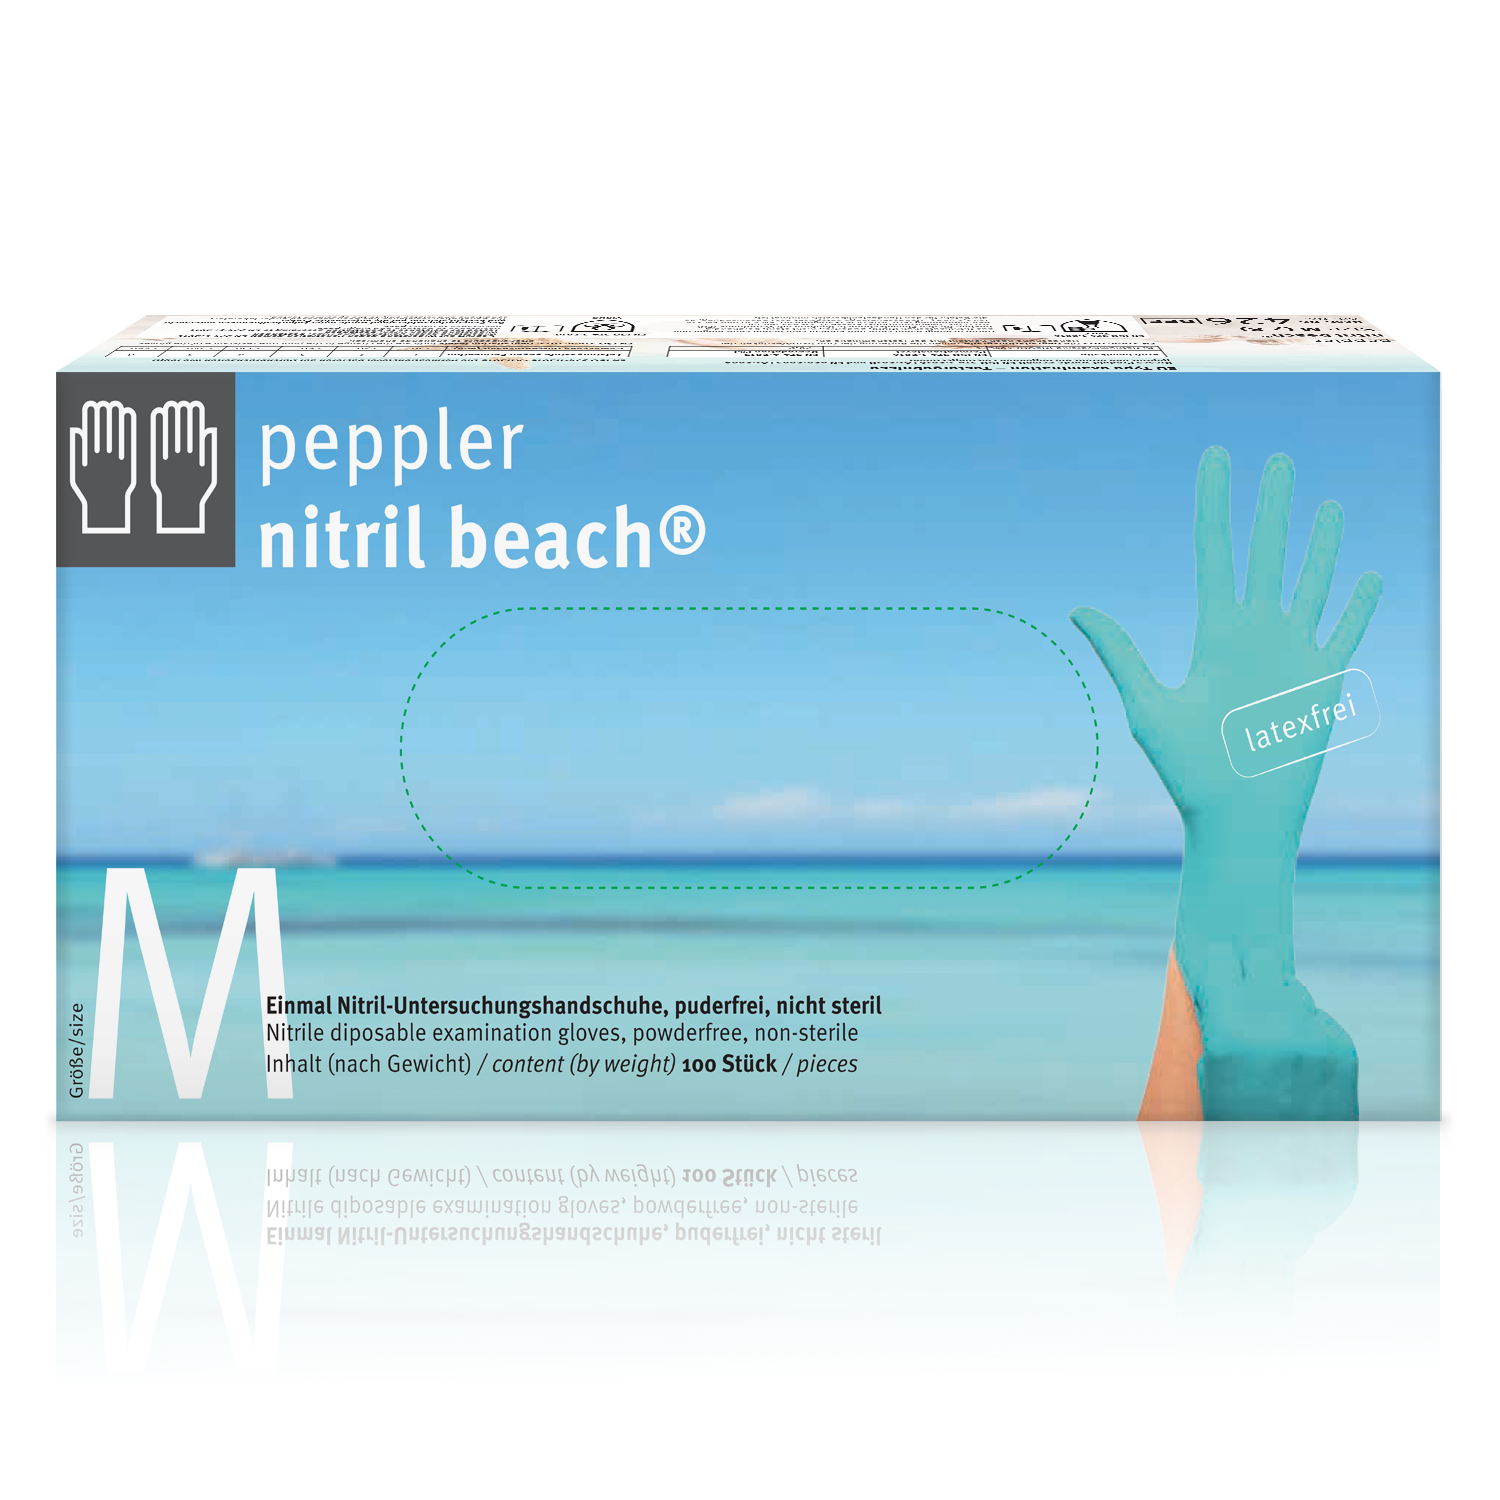 peppler nitril beach® | Nitrilhandschuh